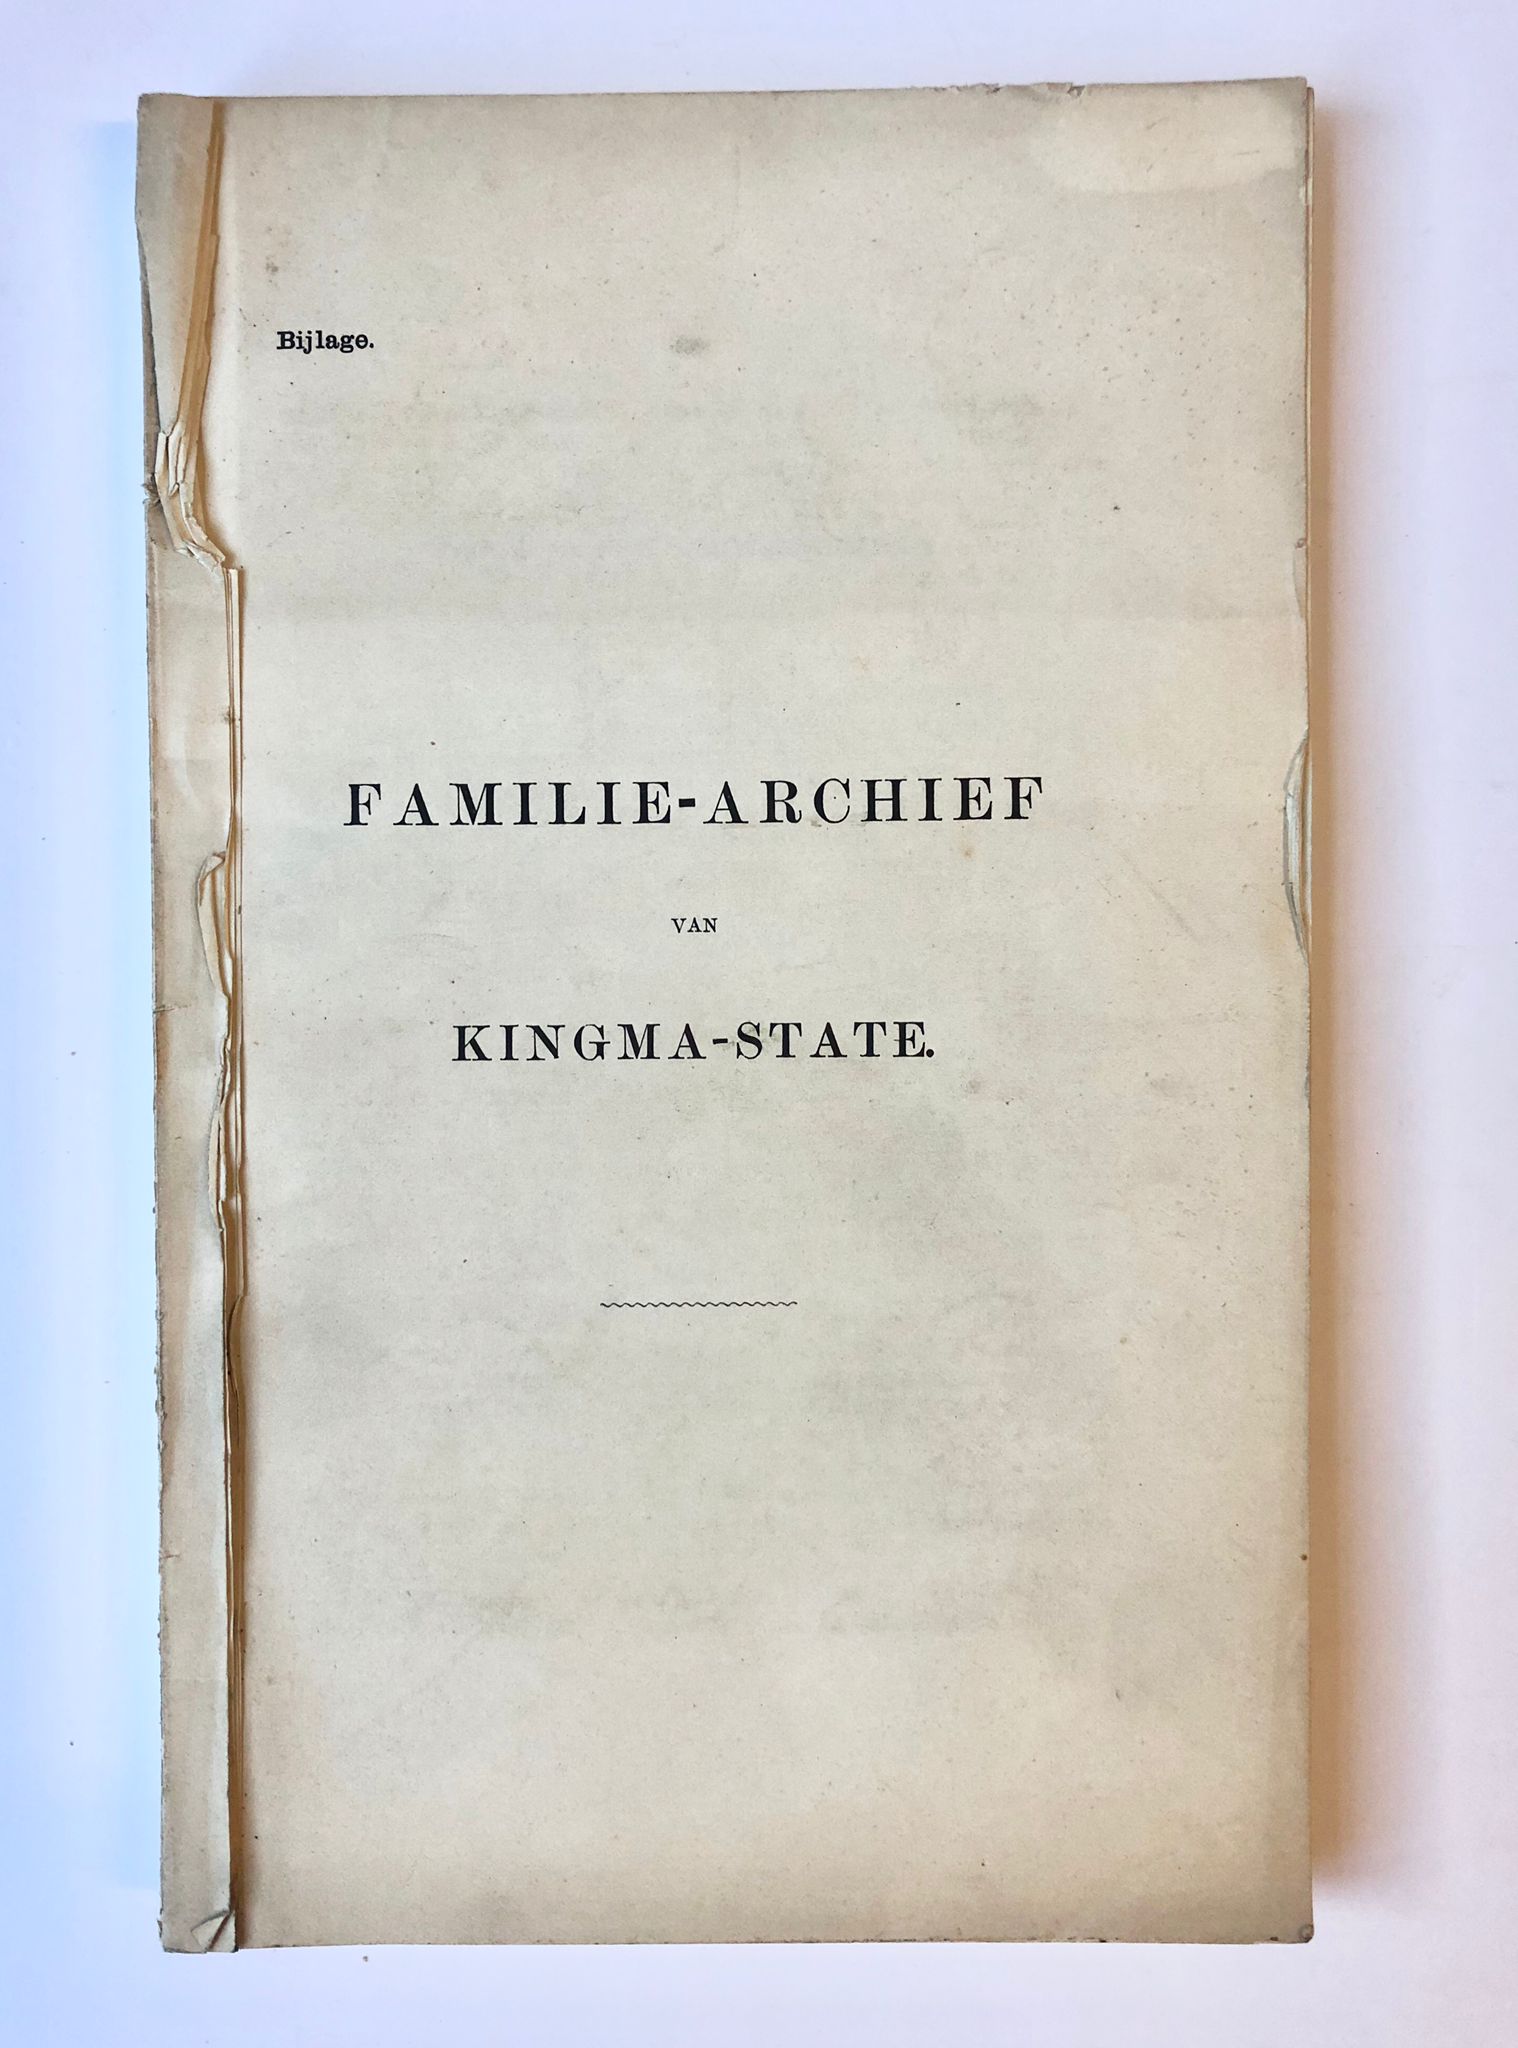 [Groningen, Family-Archive, [1908]] [Bijlage] Familie-archief van Kingma-State, 's-Gravenhage 1908, 35 pp (p. 299-545).